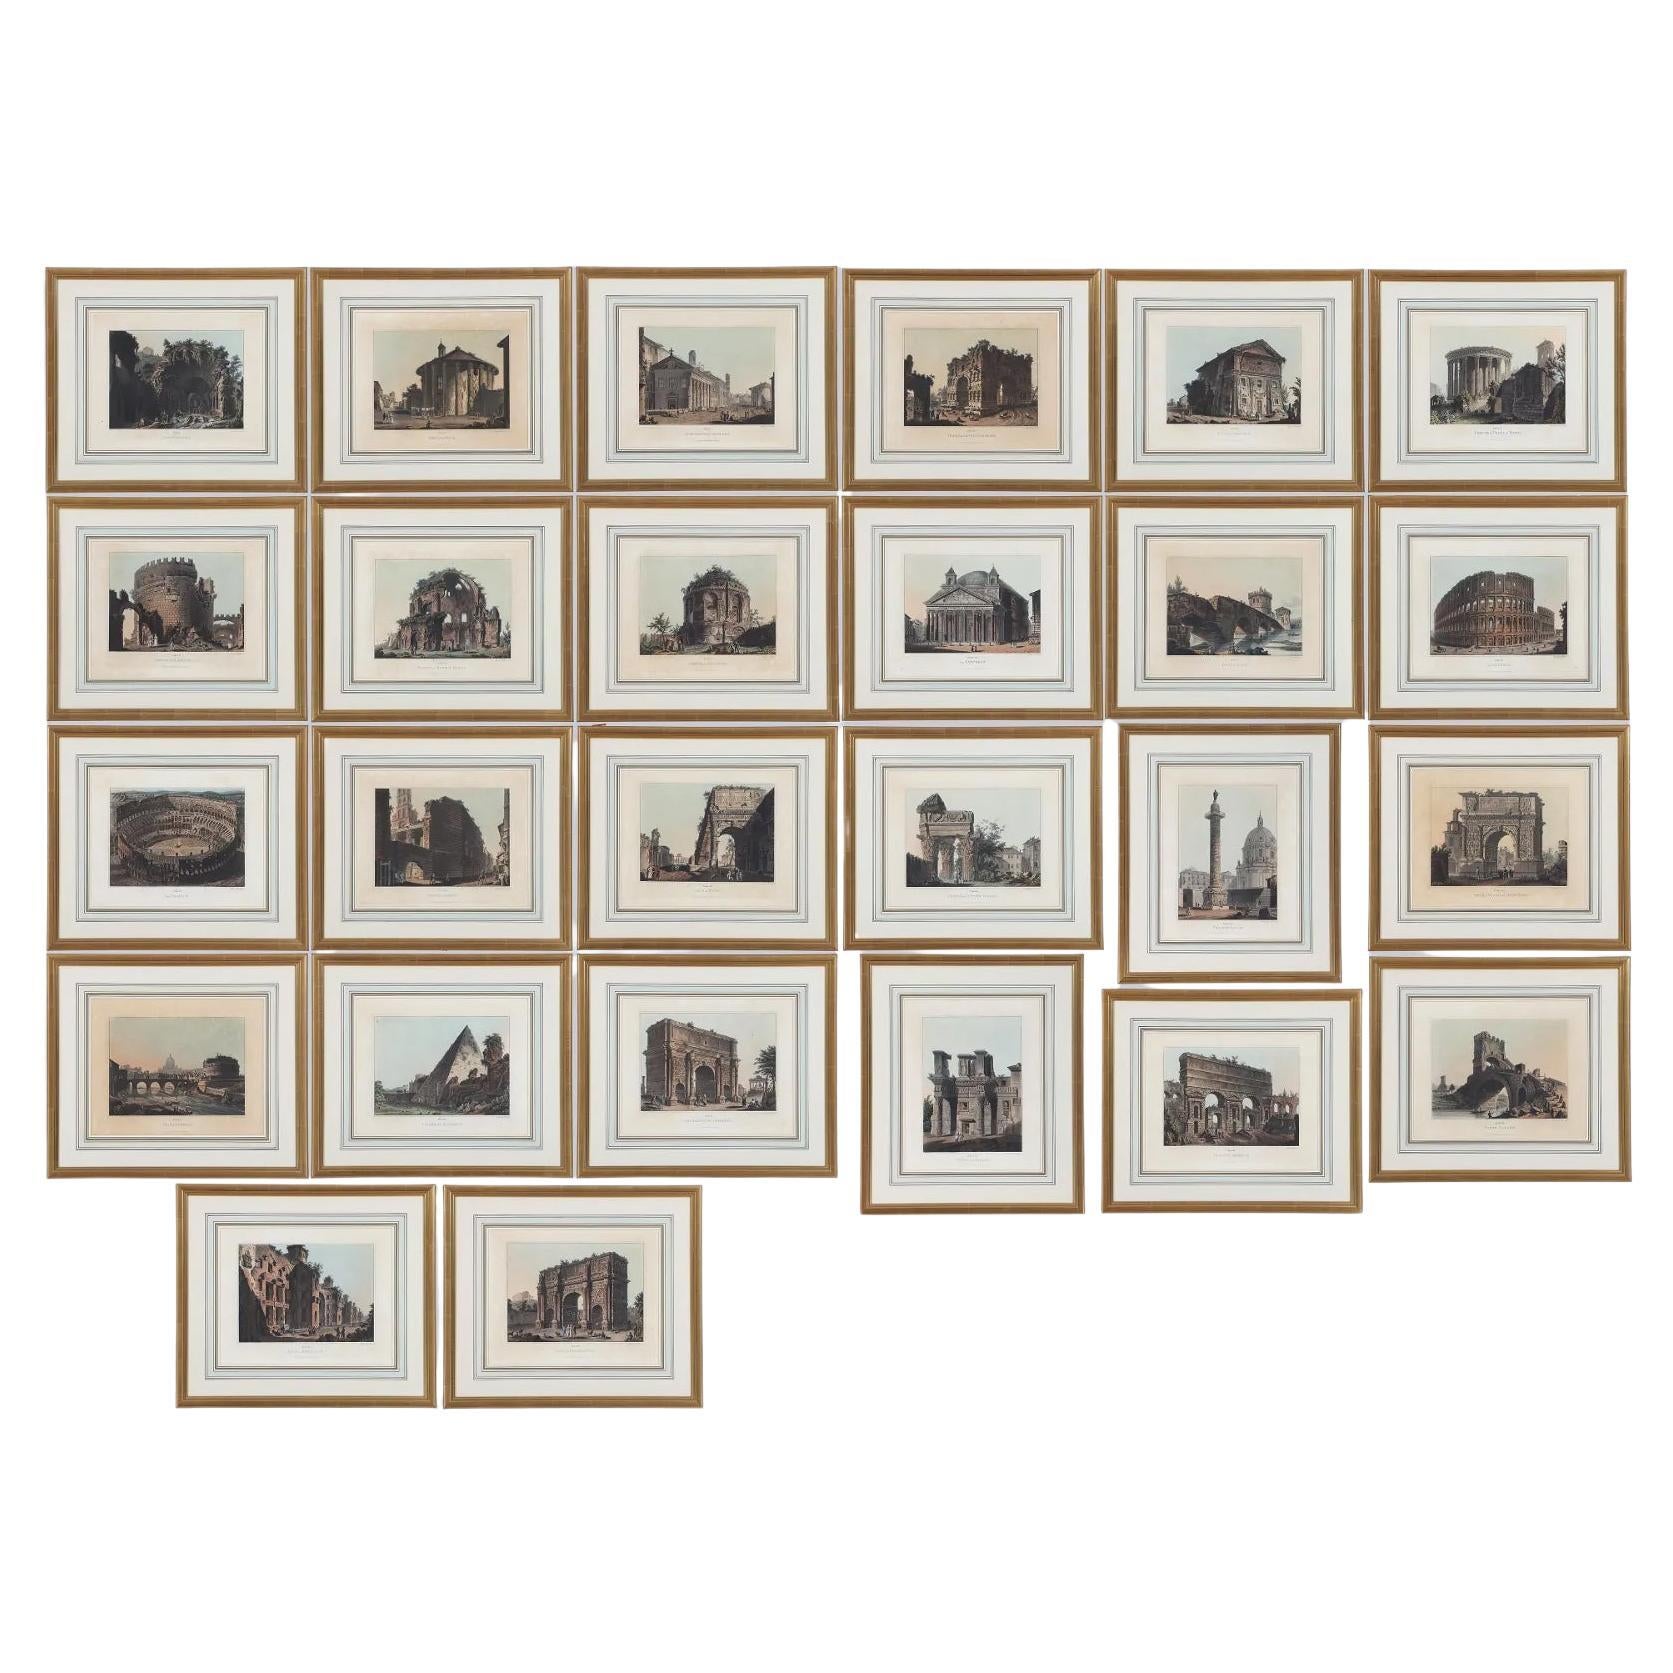  Twenty Six Framed Engravings Of " Views of  Ancient Buildings in Rome" For Sale